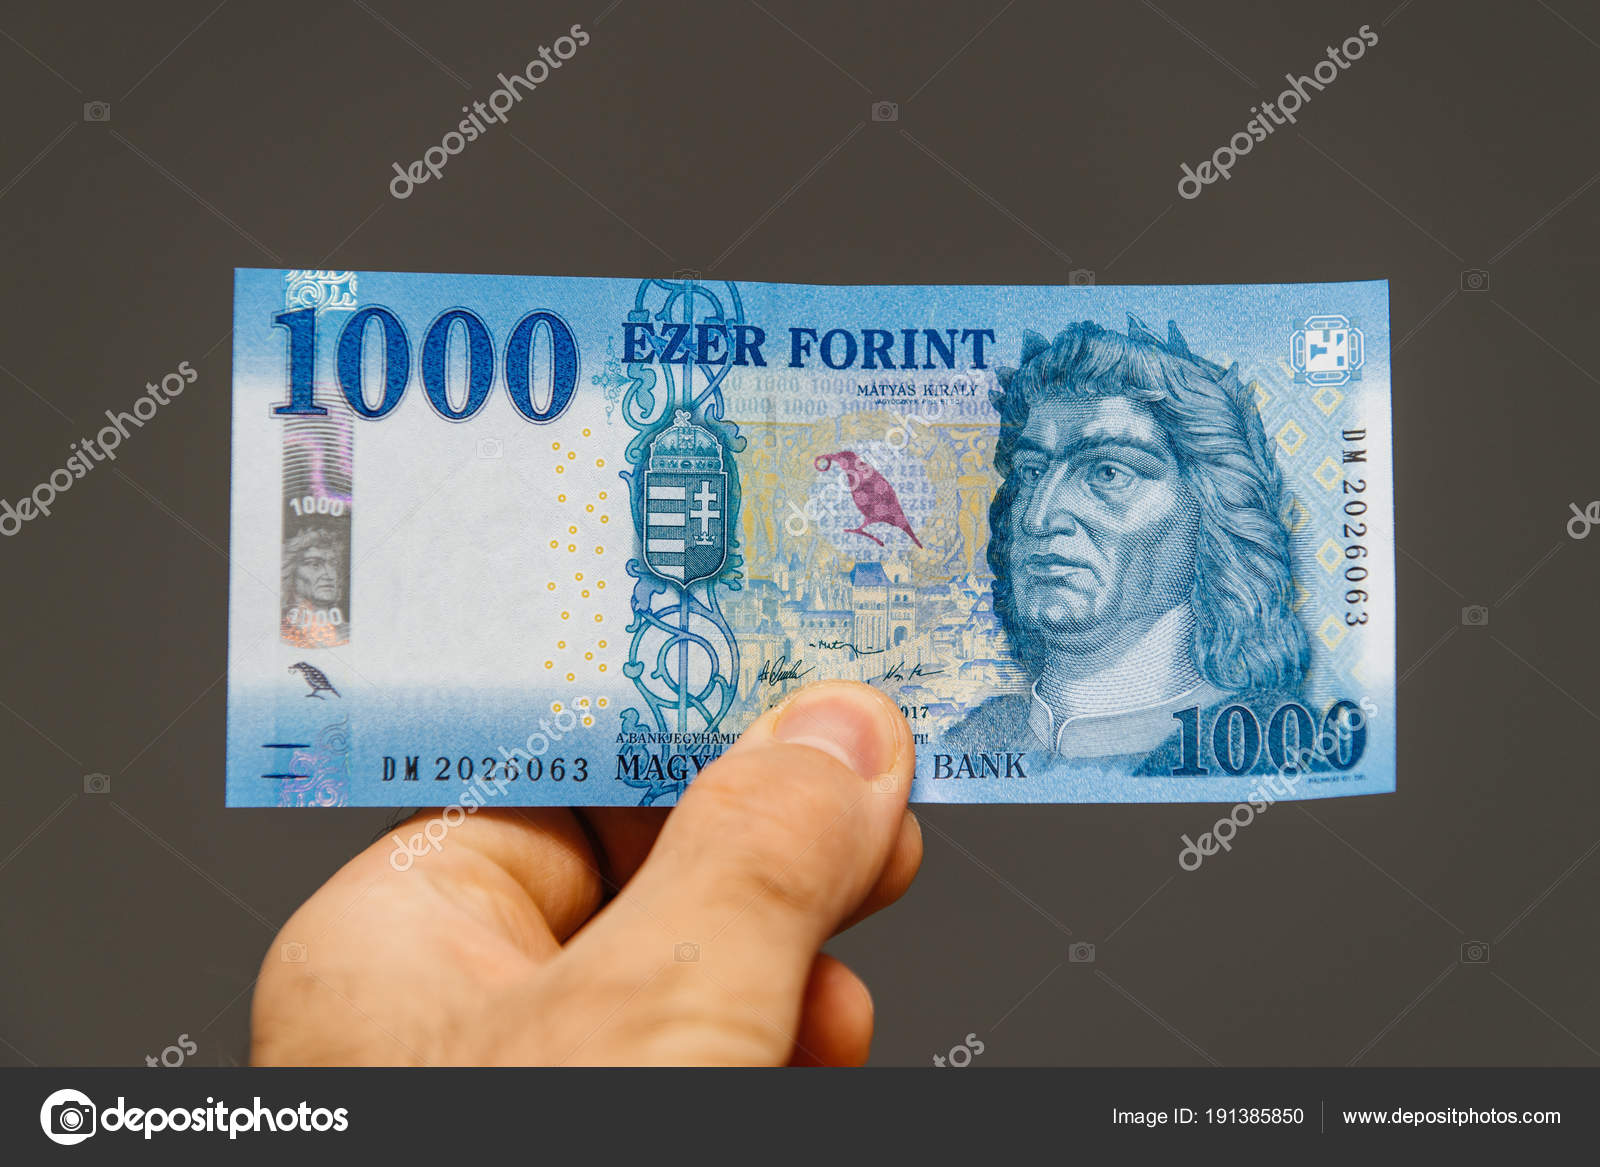 353 1000 Euro Stock Photos Images Download 1000 Euro Pictures On Depositphotos